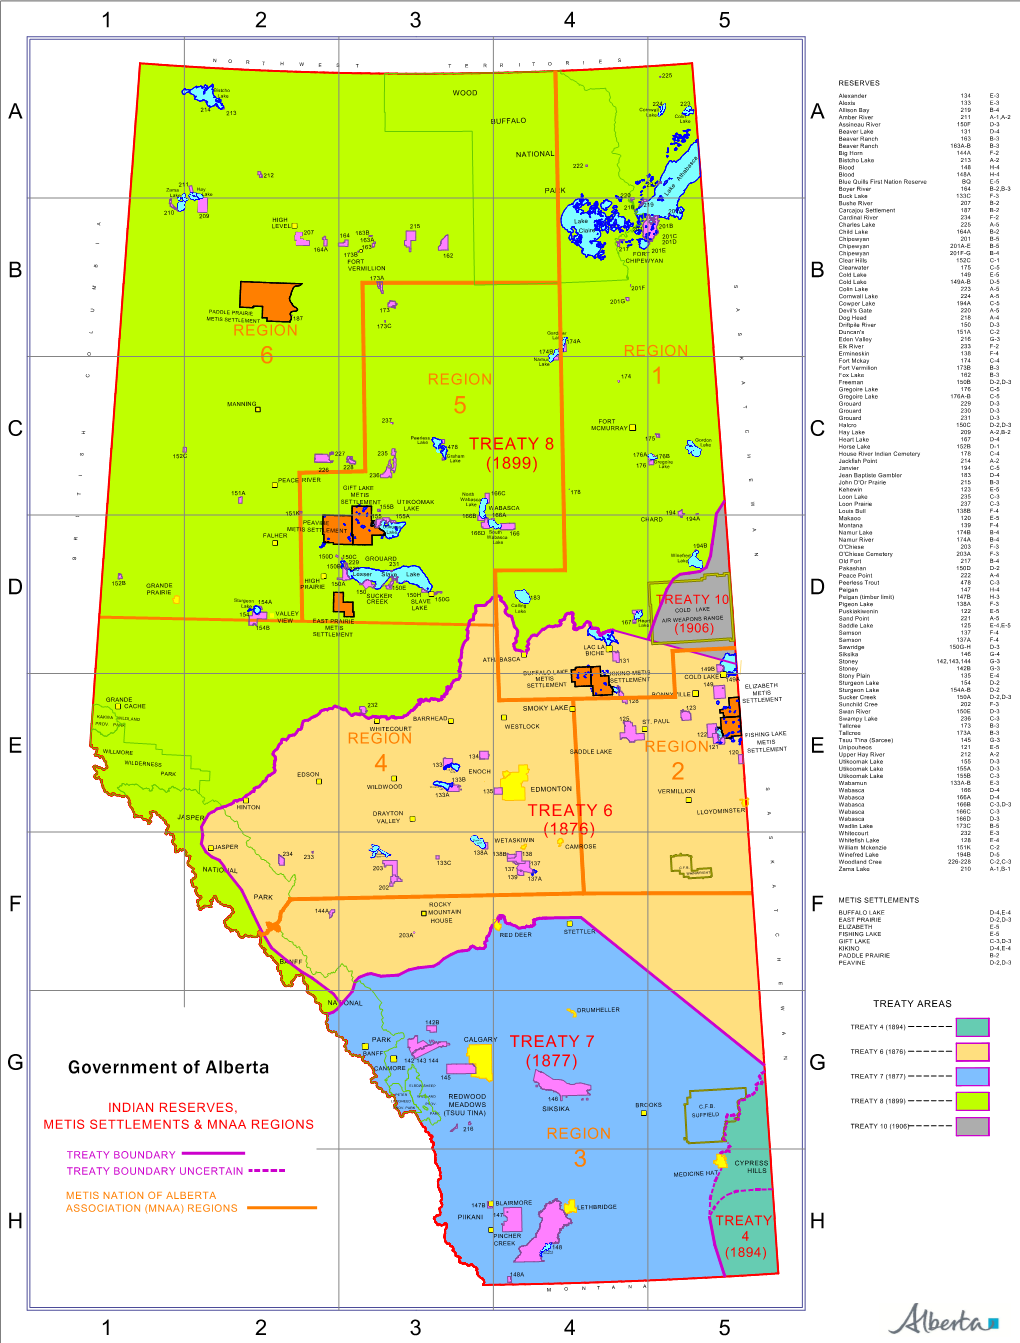 Indian Reserves, Metis Settlements & MNAA Regions